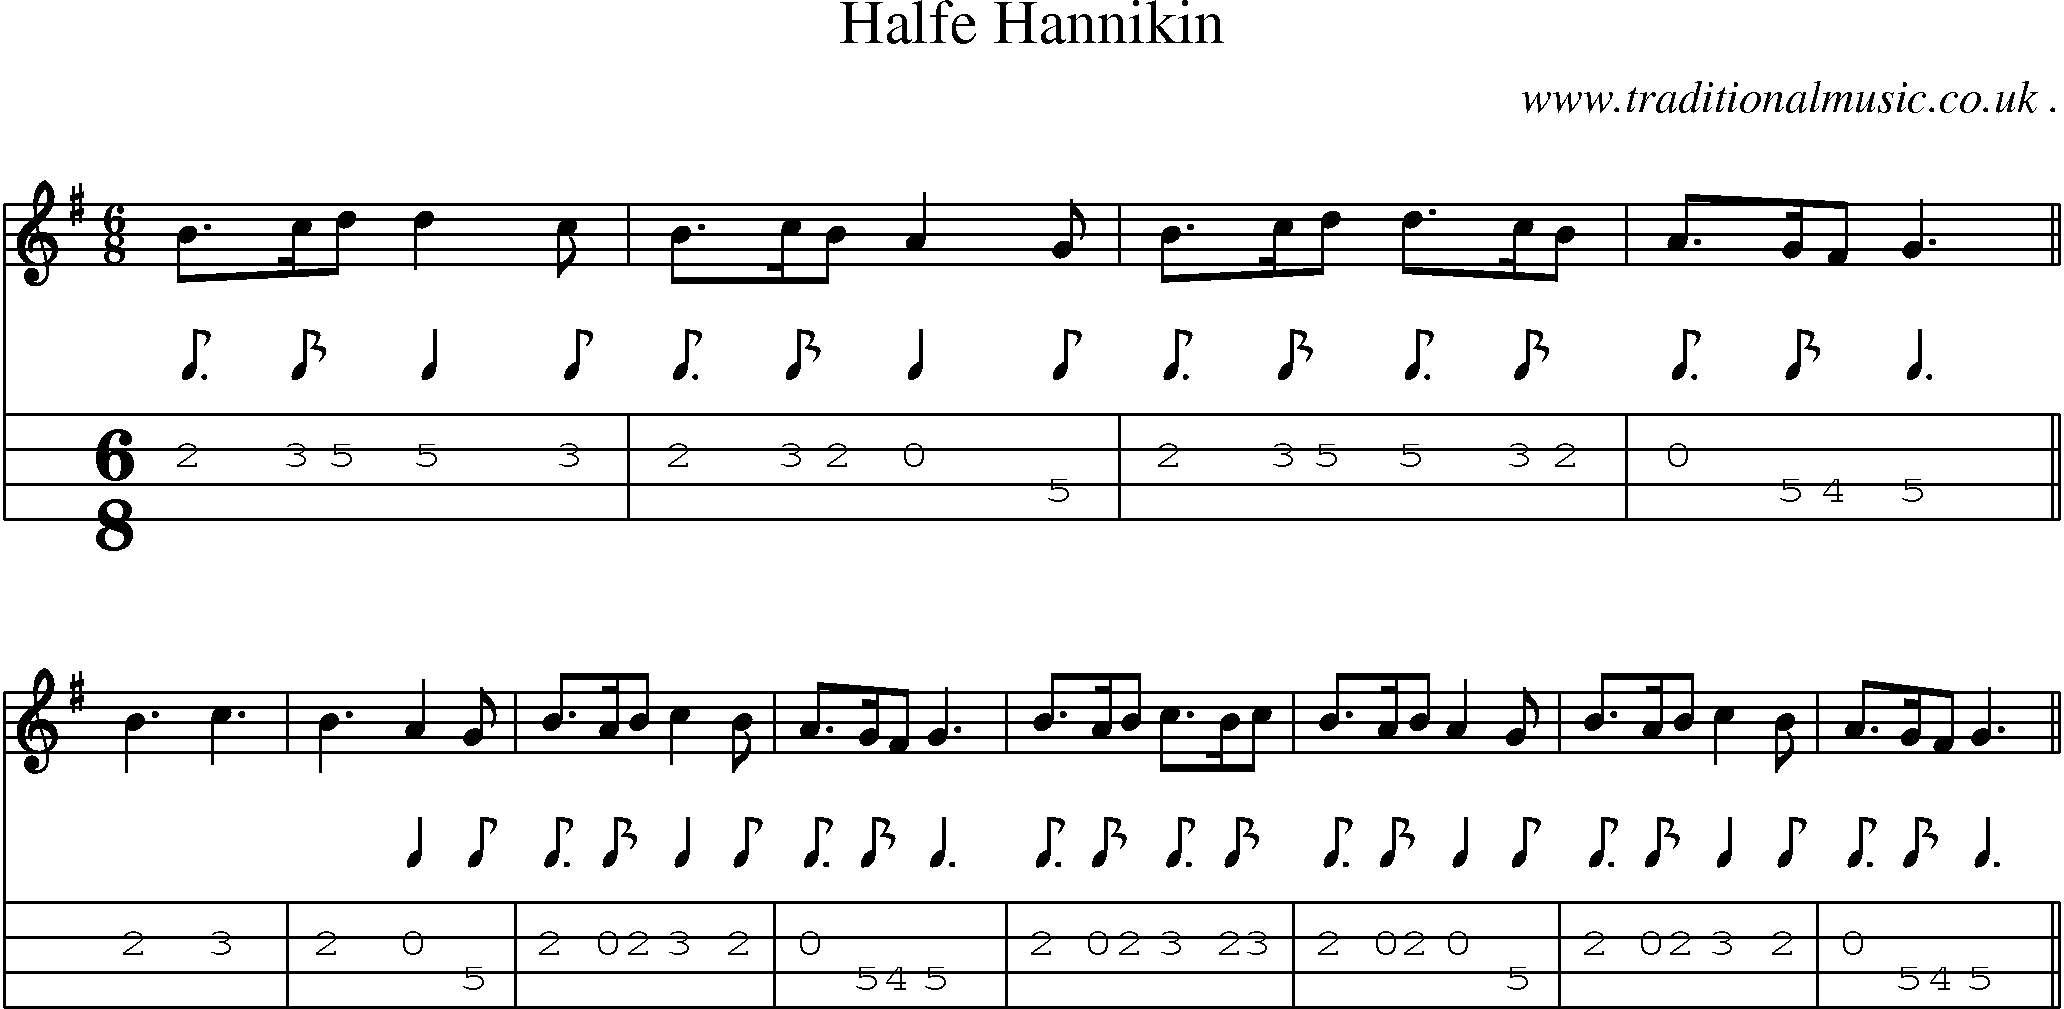 Sheet-music  score, Chords and Mandolin Tabs for Halfe Hannikin